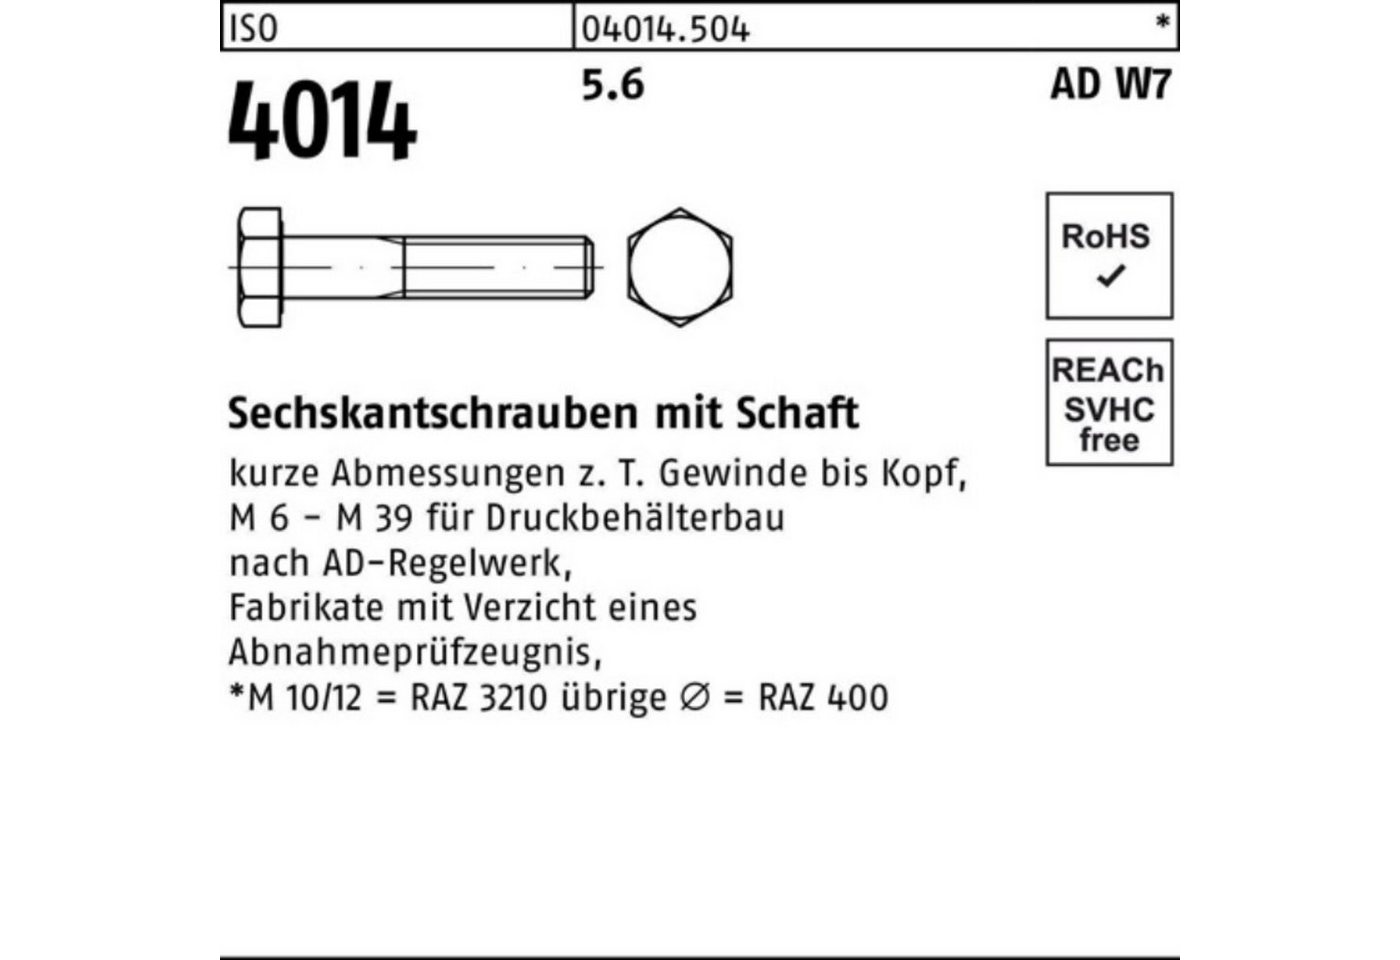 Bufab Sechskantschraube 100er Pack Sechskantschraube ISO 4014 Schaft M20x 120 5.6 W7 25 Stück von Bufab